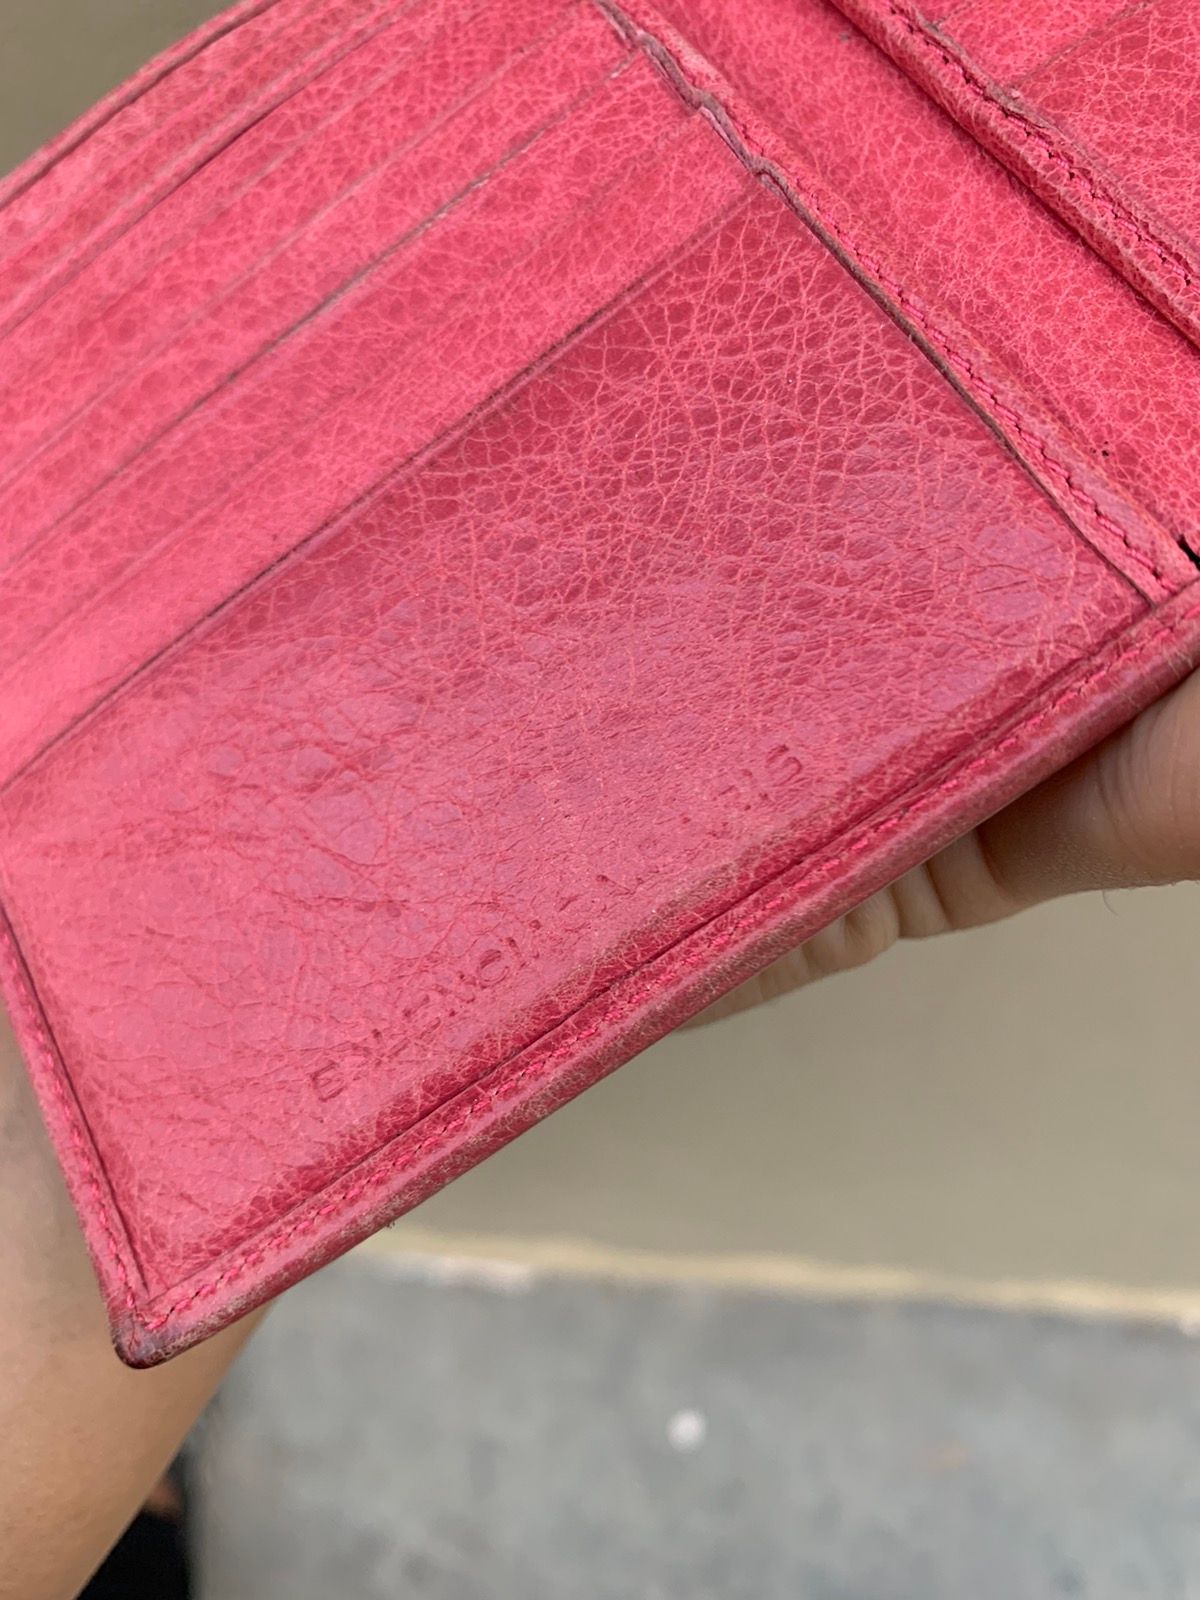 Balenciaga Wallet Pink leather - 6